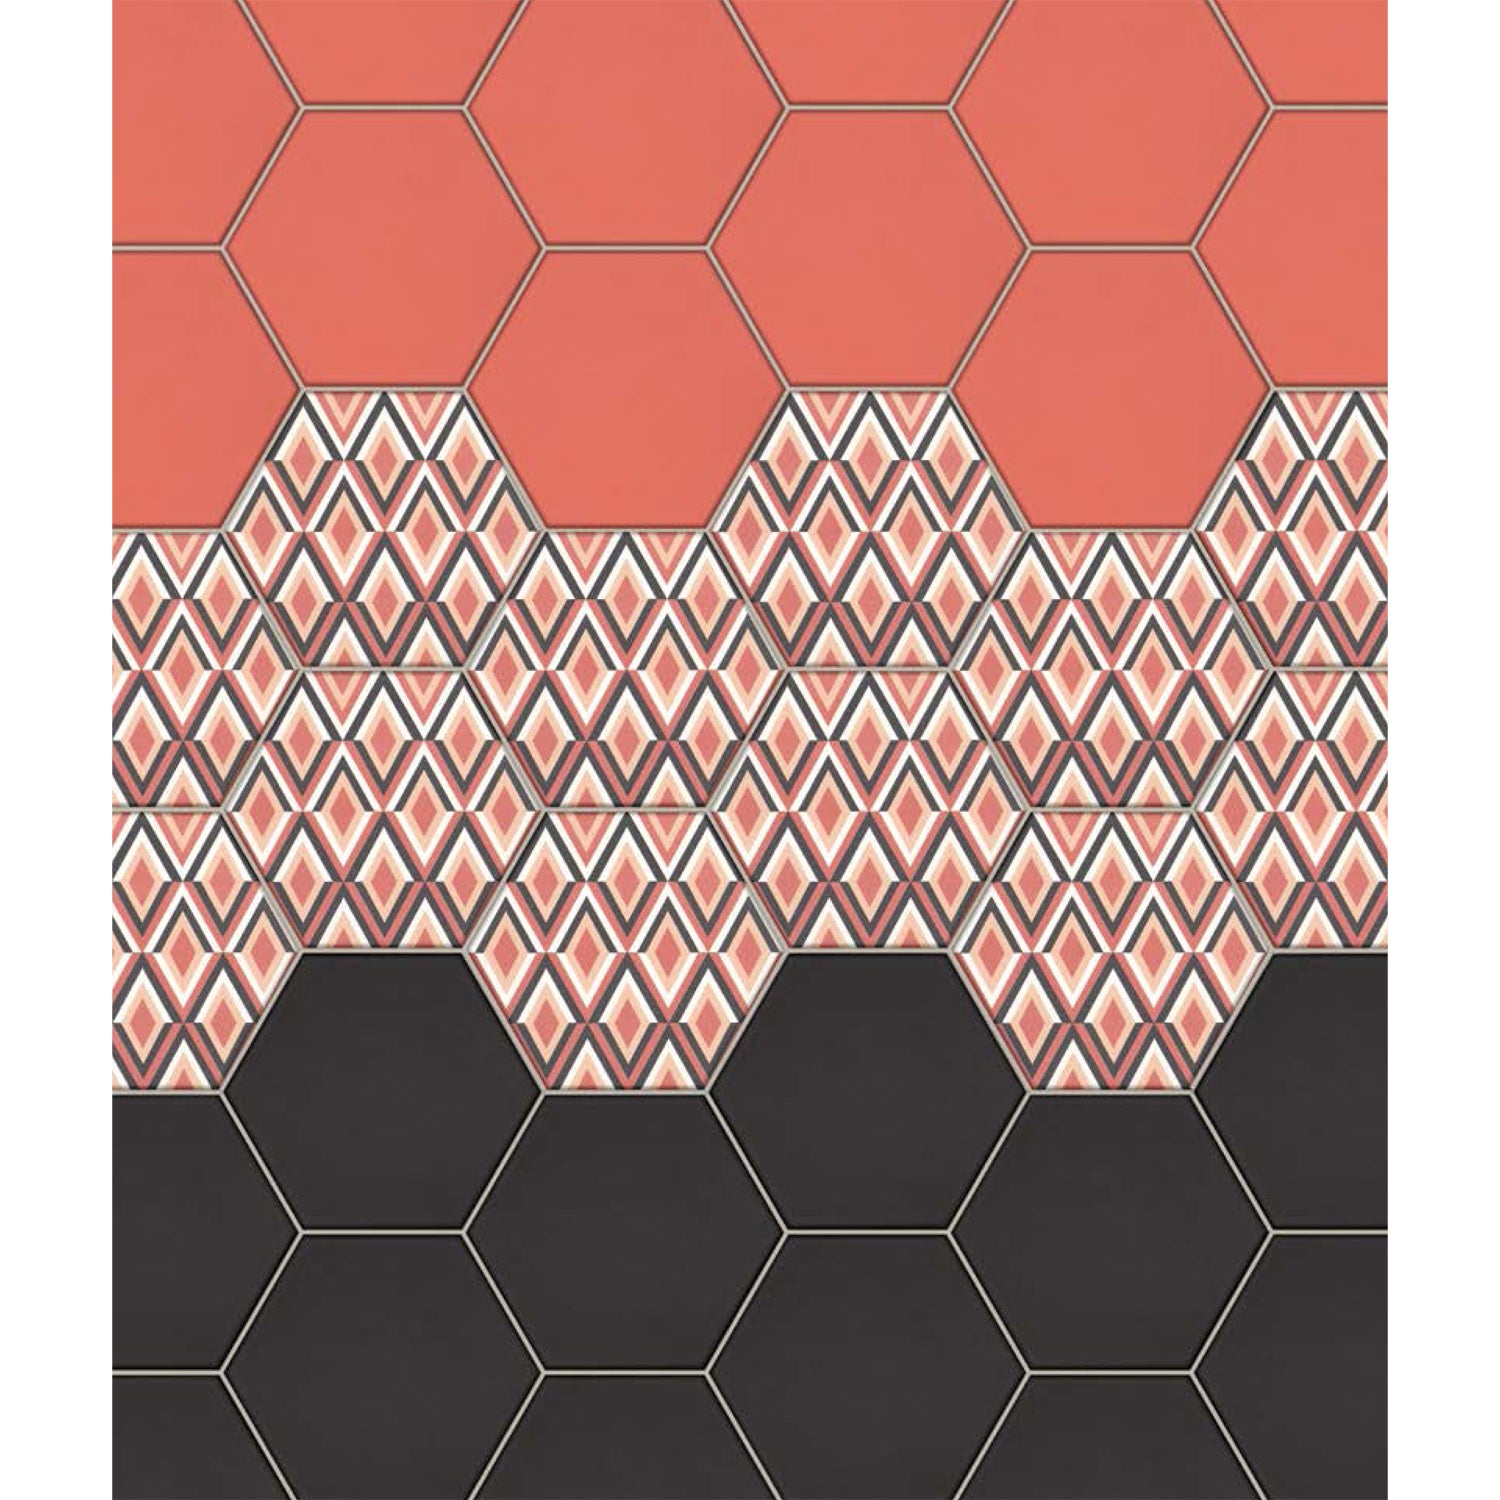 Topcu - Flamingo 6 in. Porcelain Hexagon Tile - Black